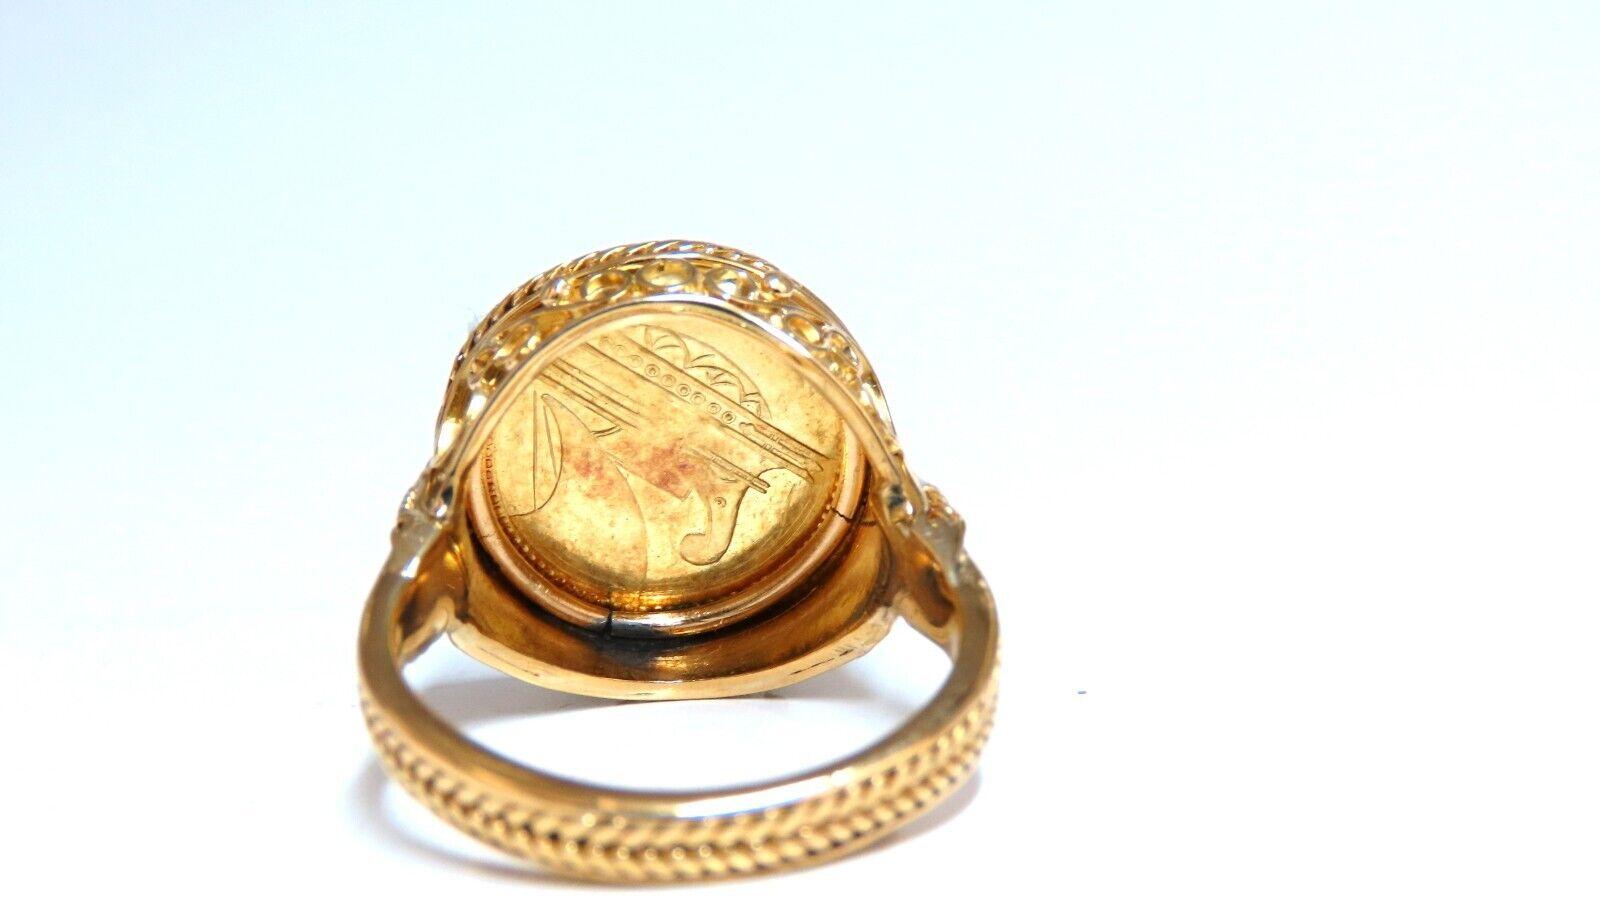 Turkey coin ring

18kt yellow gold

7.7 grams

Deck: 17 x 17mm

Depth: 5mm